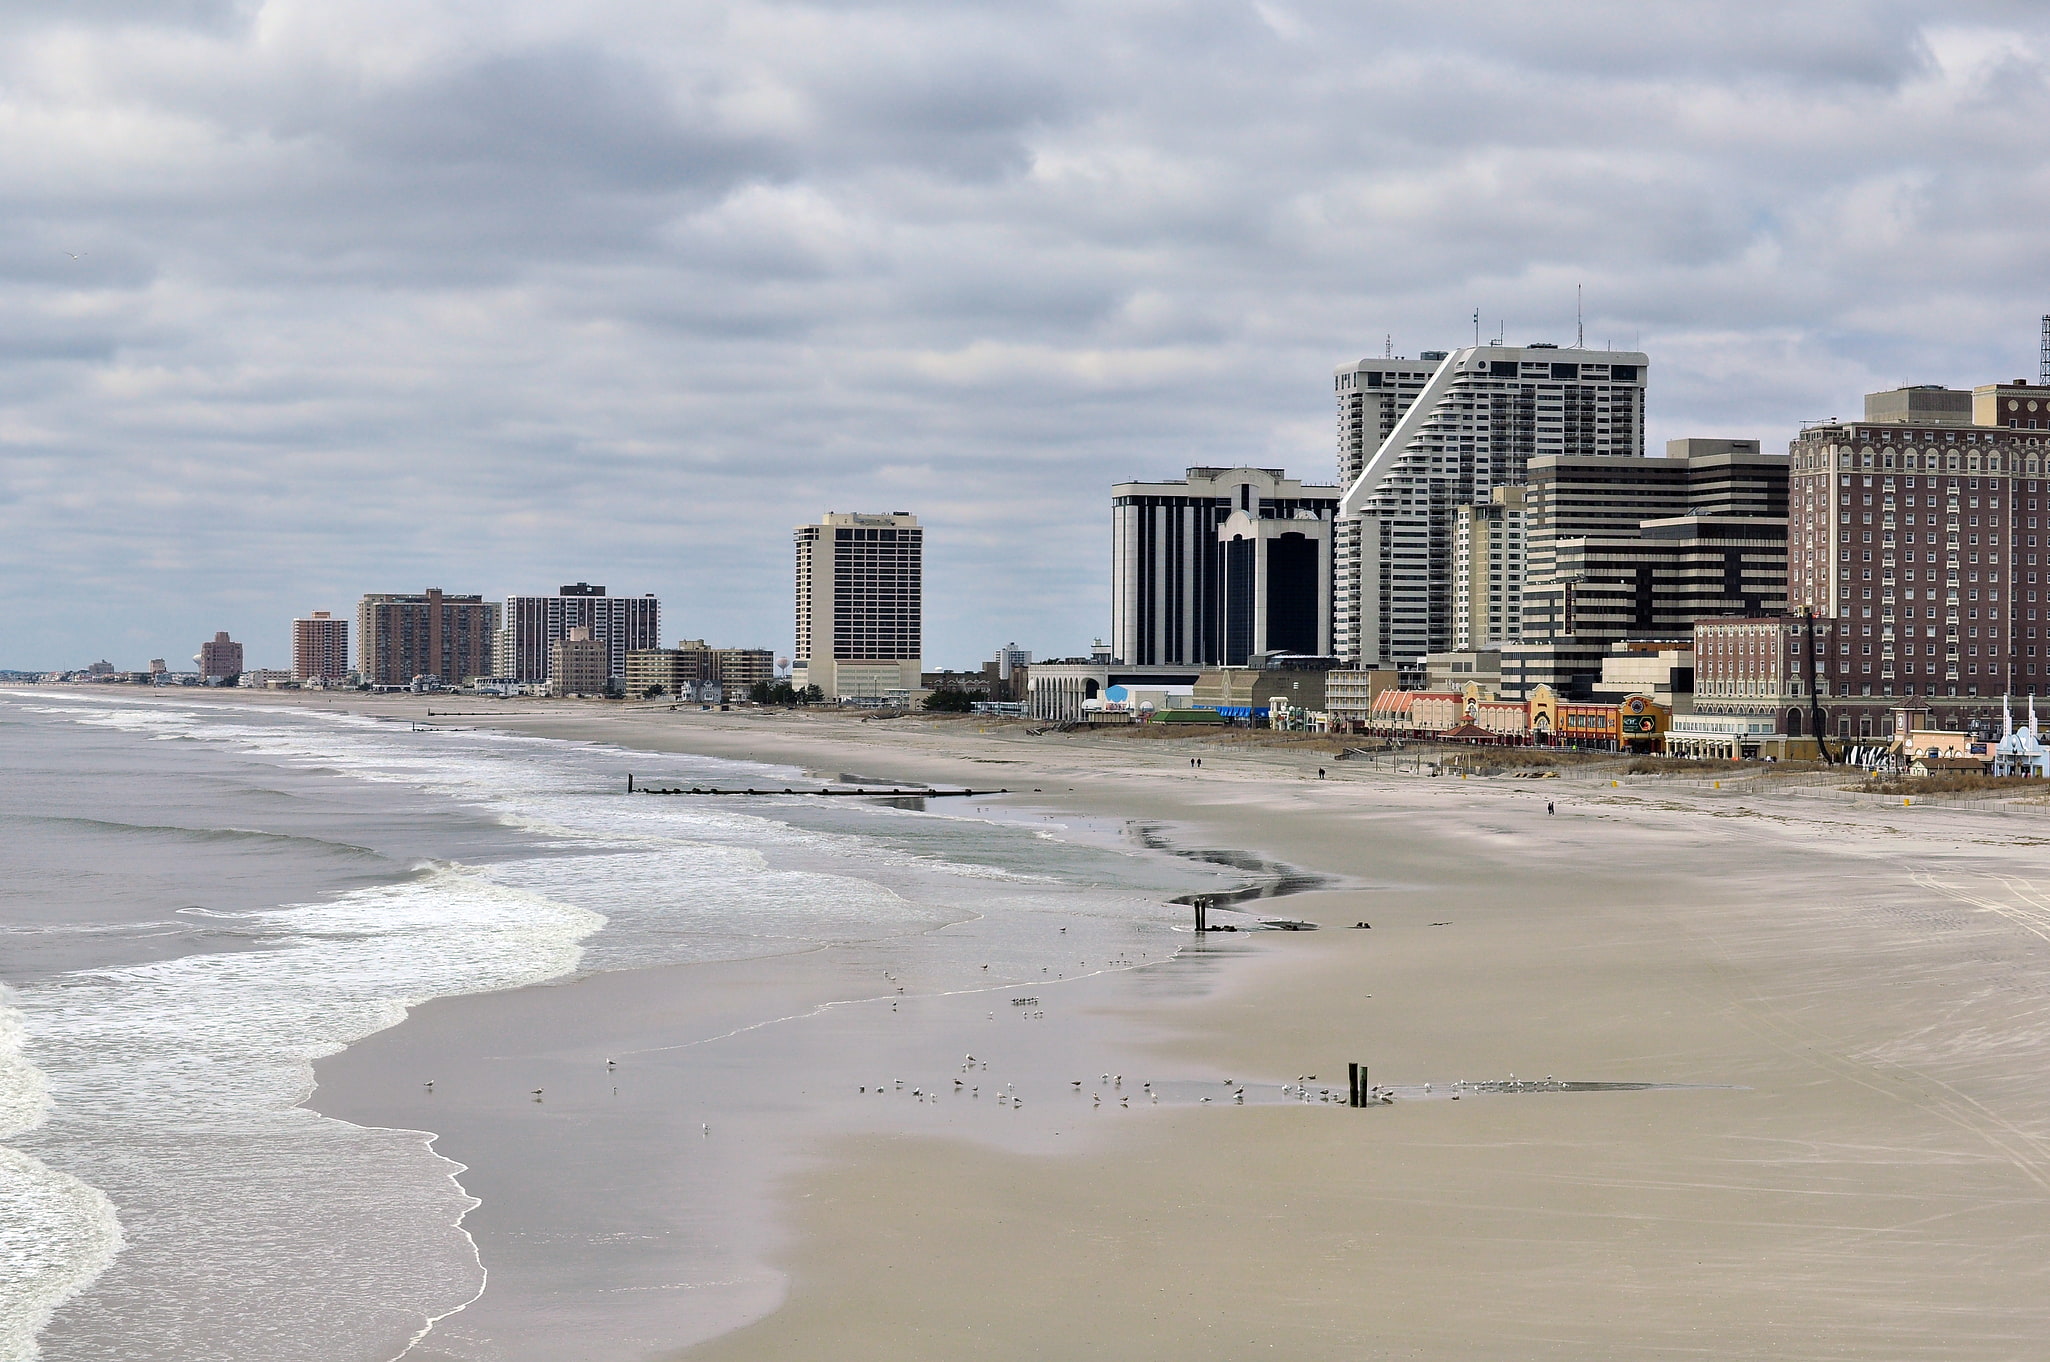 Atlantic City, United States